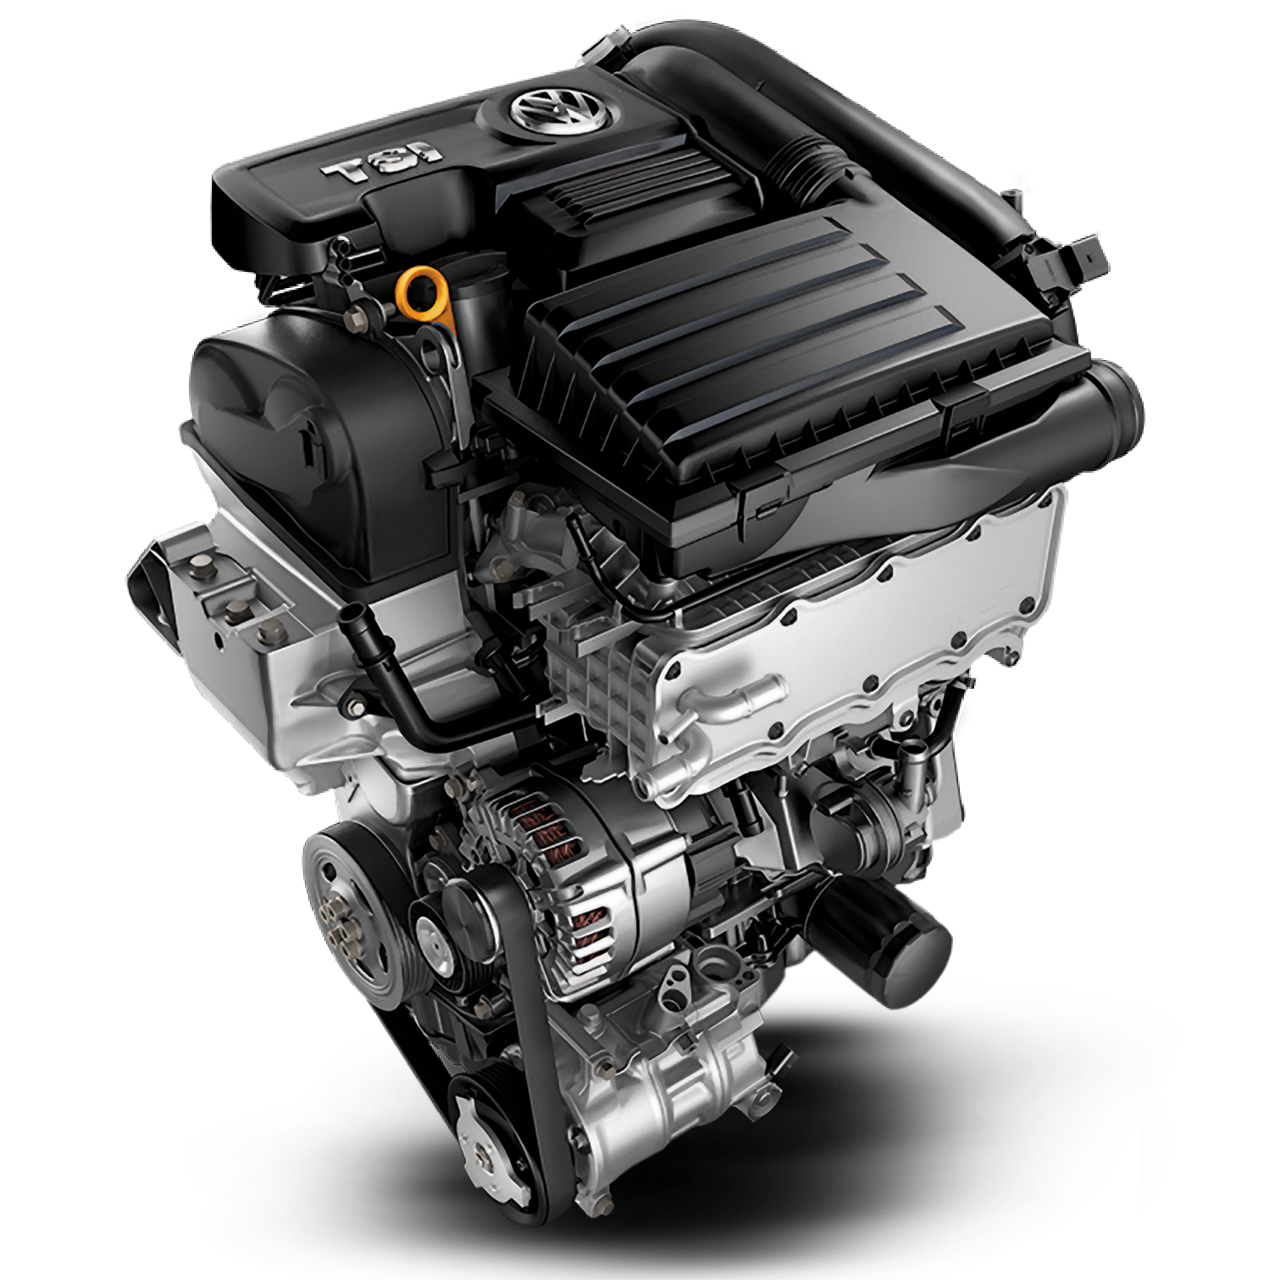 Двигатель тигуан 1.4 150. Мотор CZCA 1.4 TSI. Мотор 1.4 TSI 125 Л.С. Мотор Фольксваген 1.4 TSI. Volkswagen 1.4 TSI 150 Л.С.